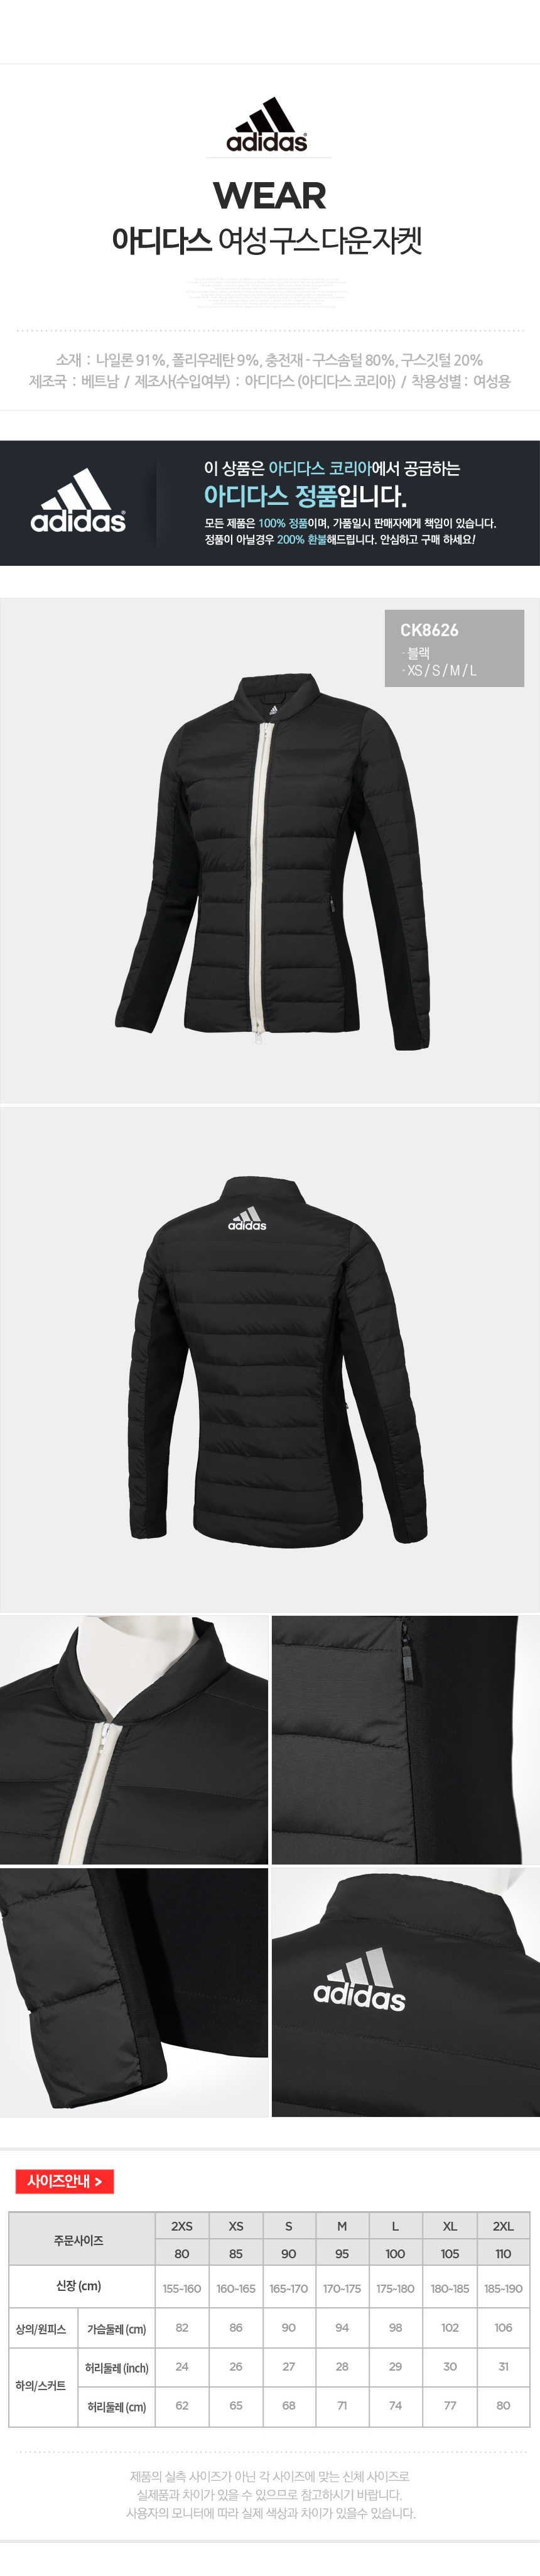 adidas_goose_down_jacket_20.jpg